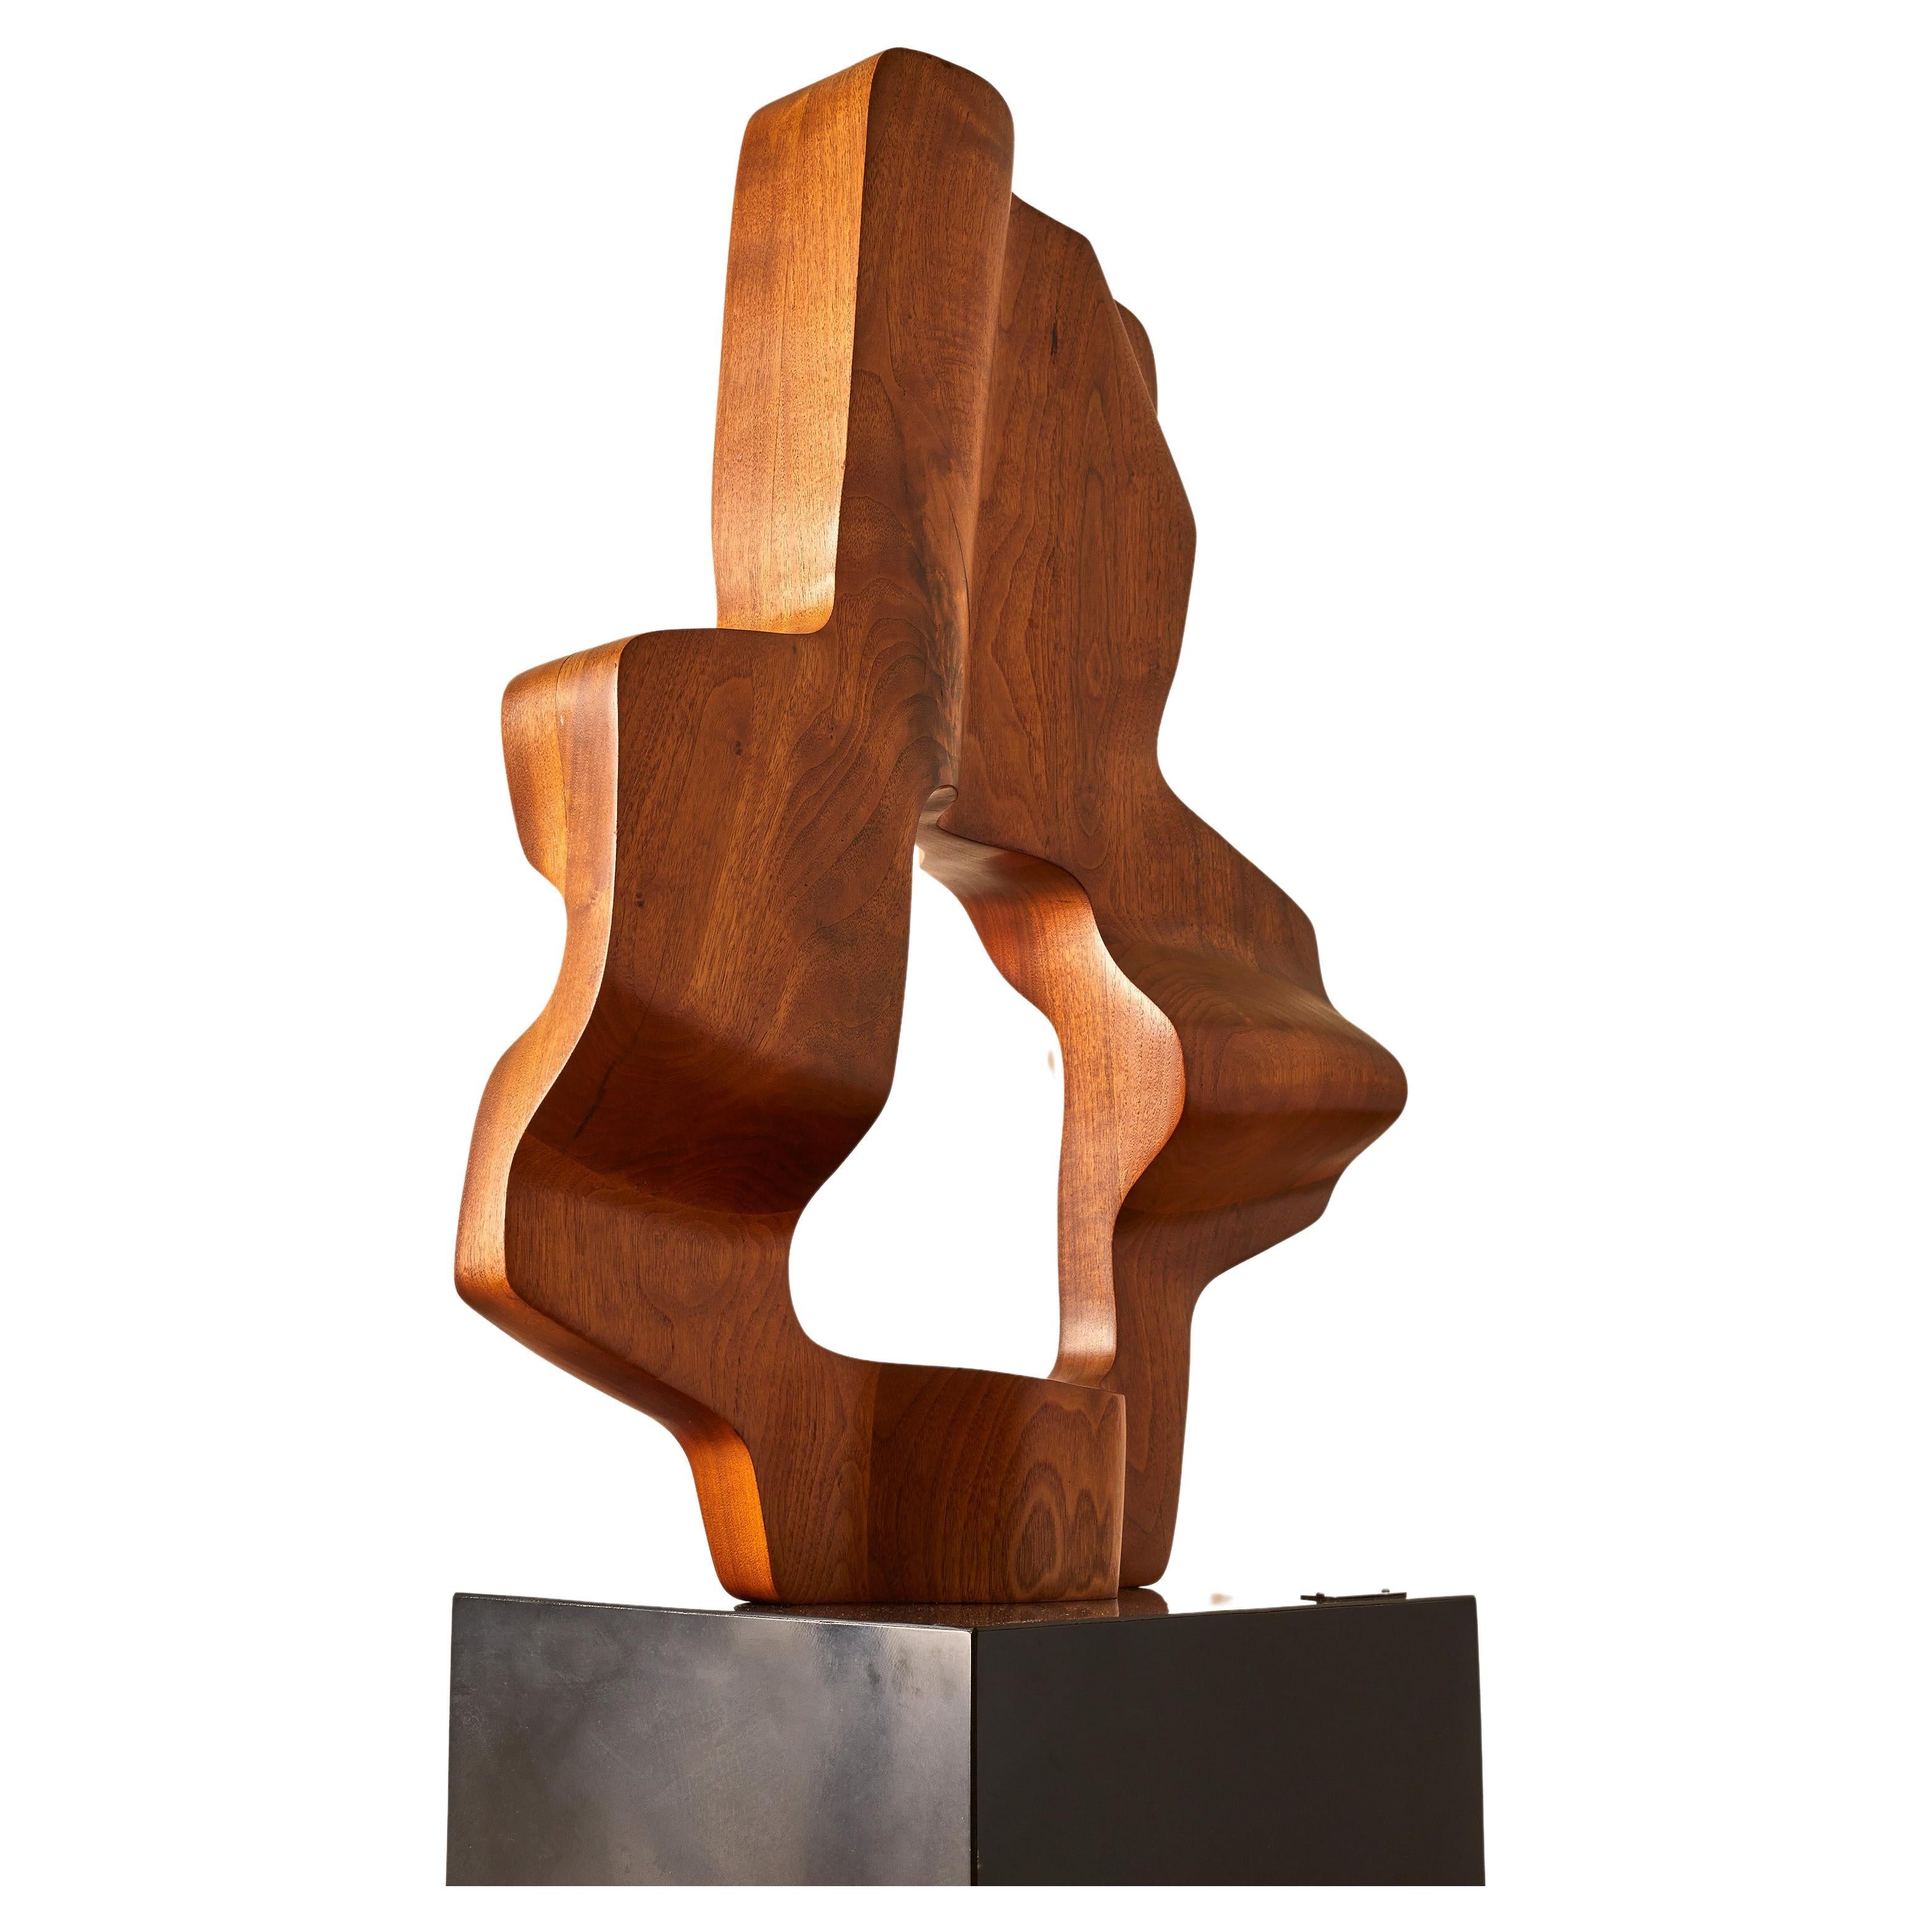 John Campbell Skulptur aus Nussbaumholz